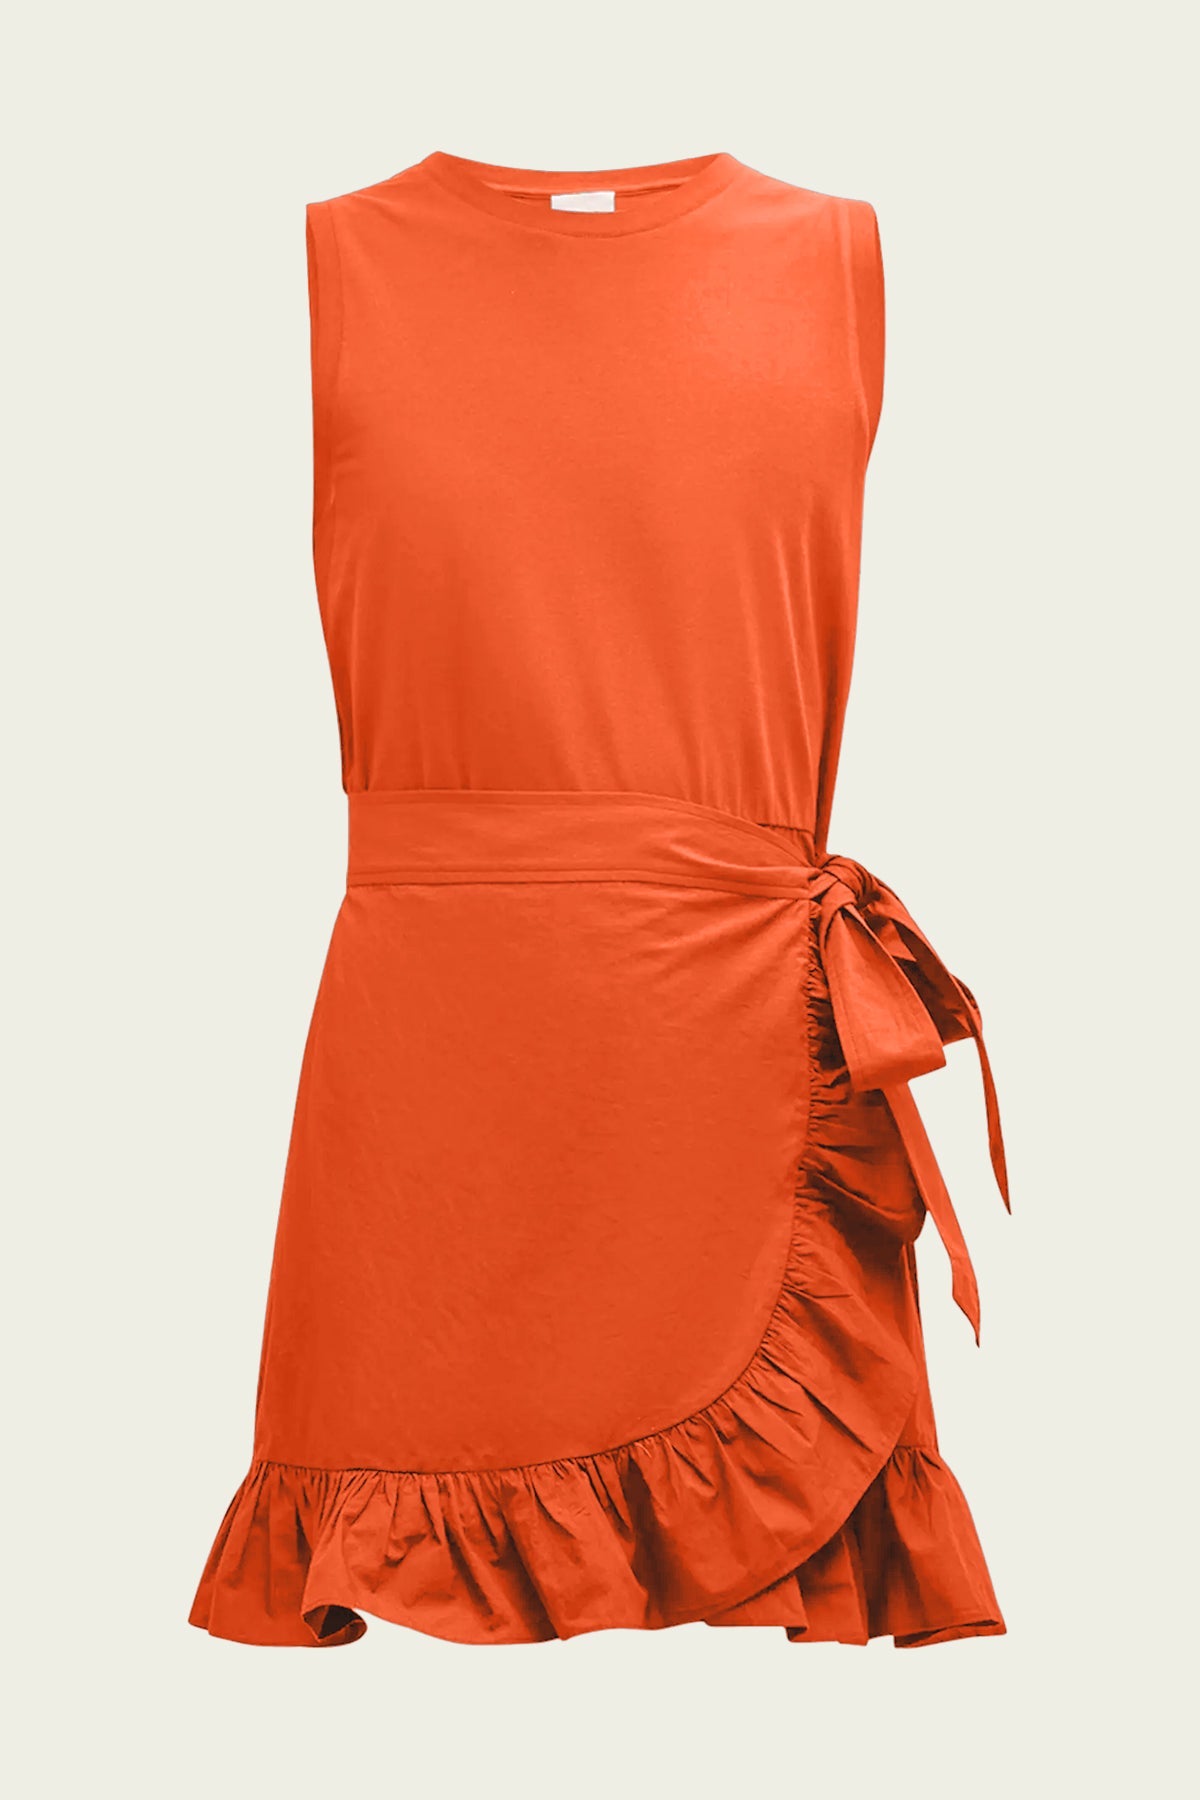 Mahlia Mini Dress in Deep Tangelo - shop-olivia.com